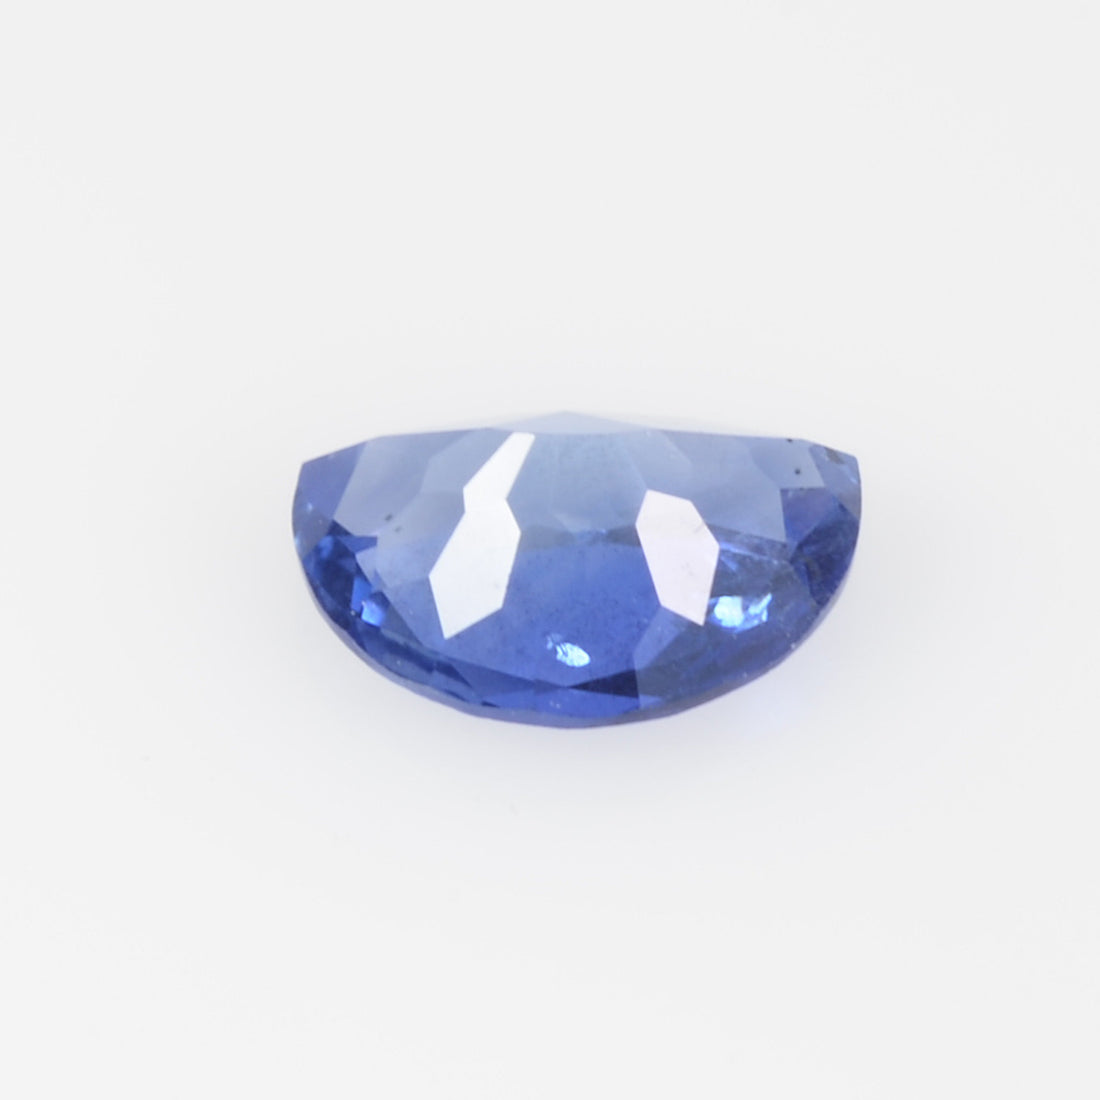 0.67 Cts Natural Blue Sapphire Loose Gemstone Fancy Half Moon Cut - Thai Gems Export Ltd.